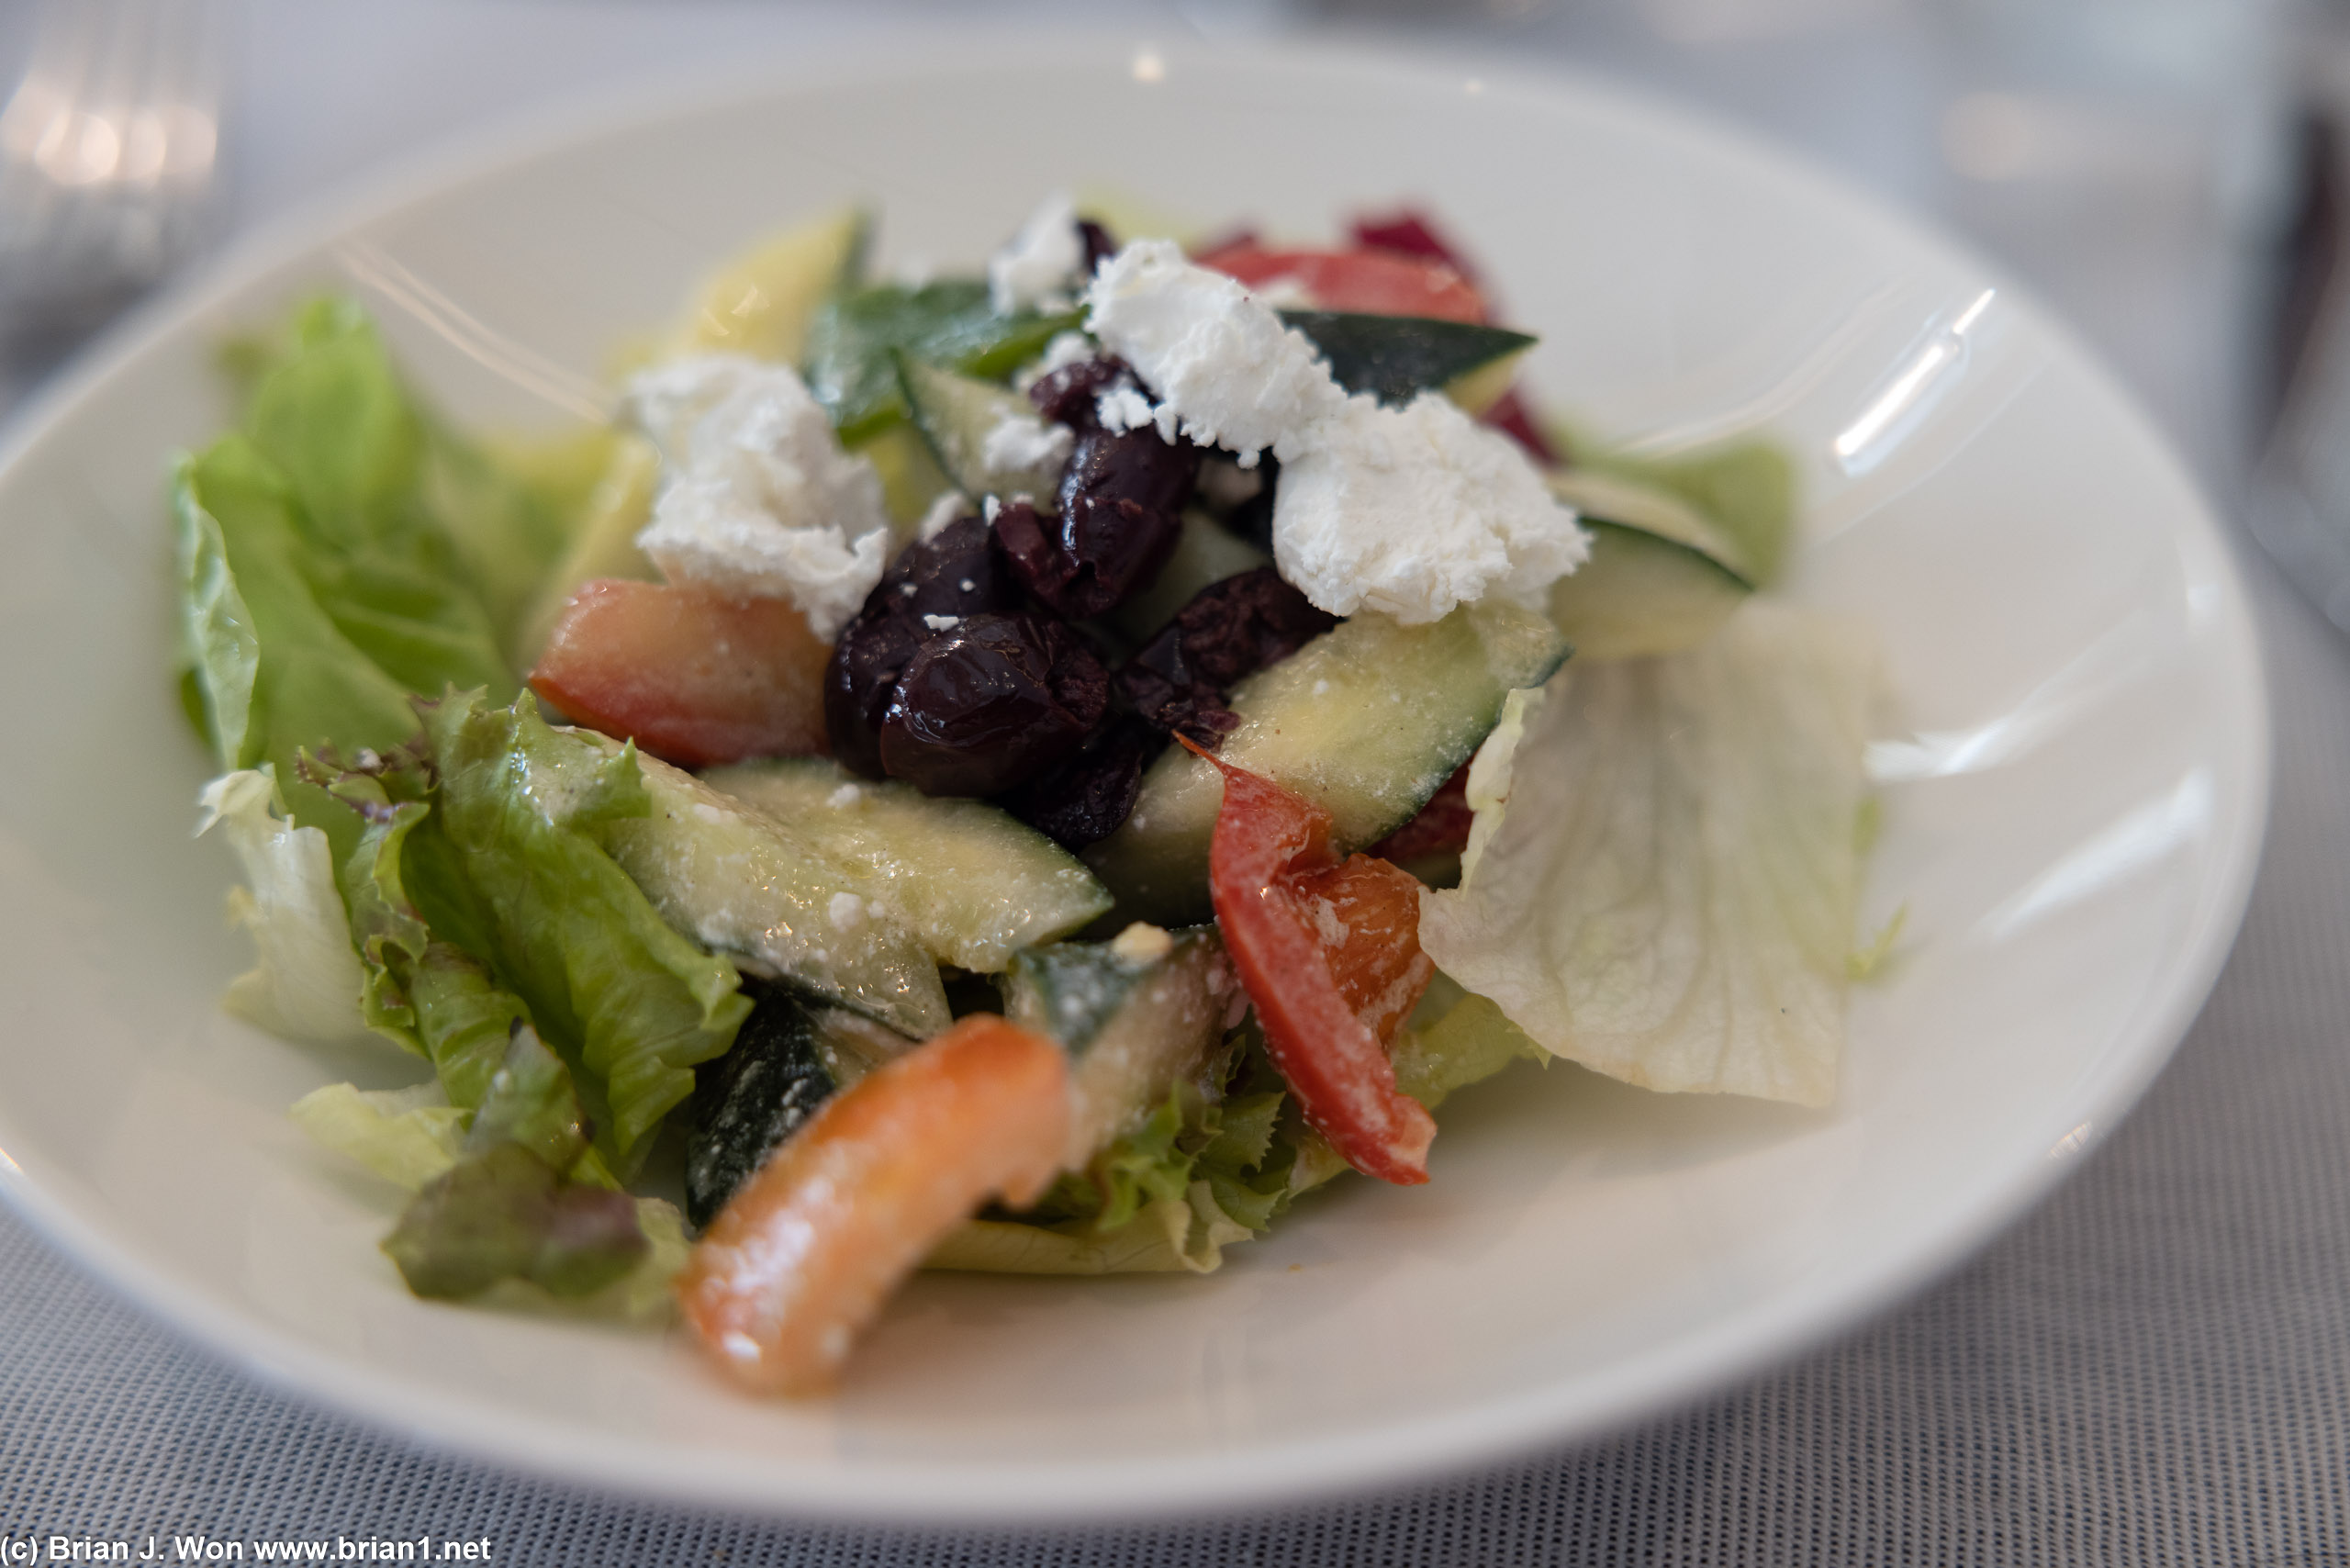 Greek salad was not really a greek salad?